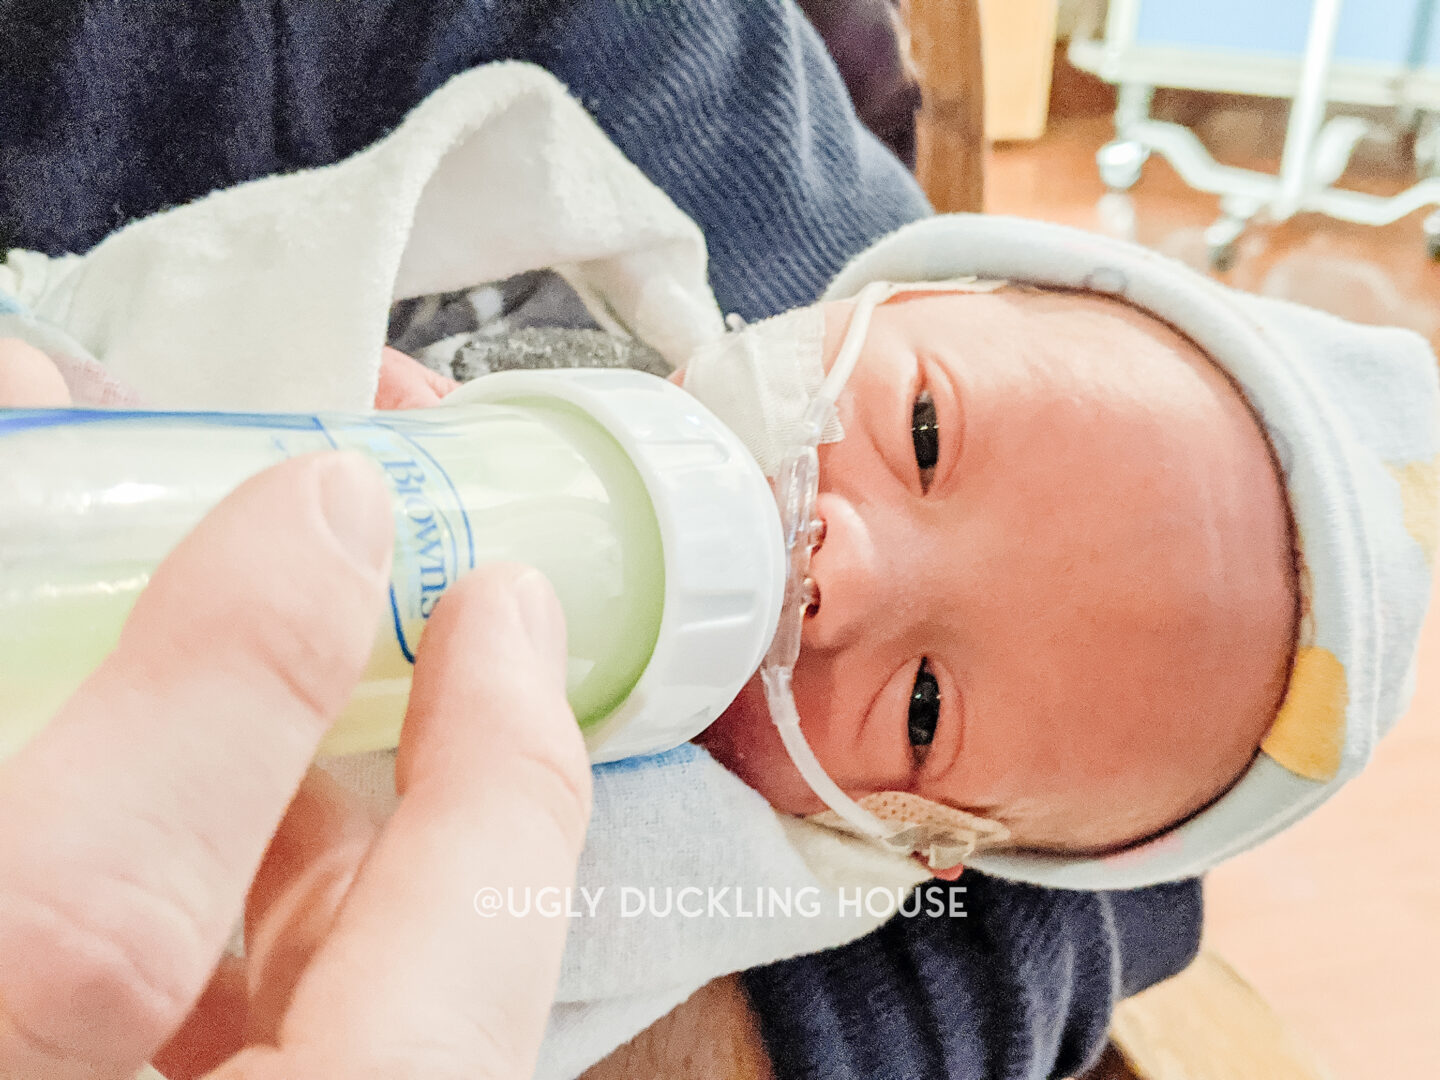 Ellis opening his eyes while bottle feeding in the NICU - Covid preemie life